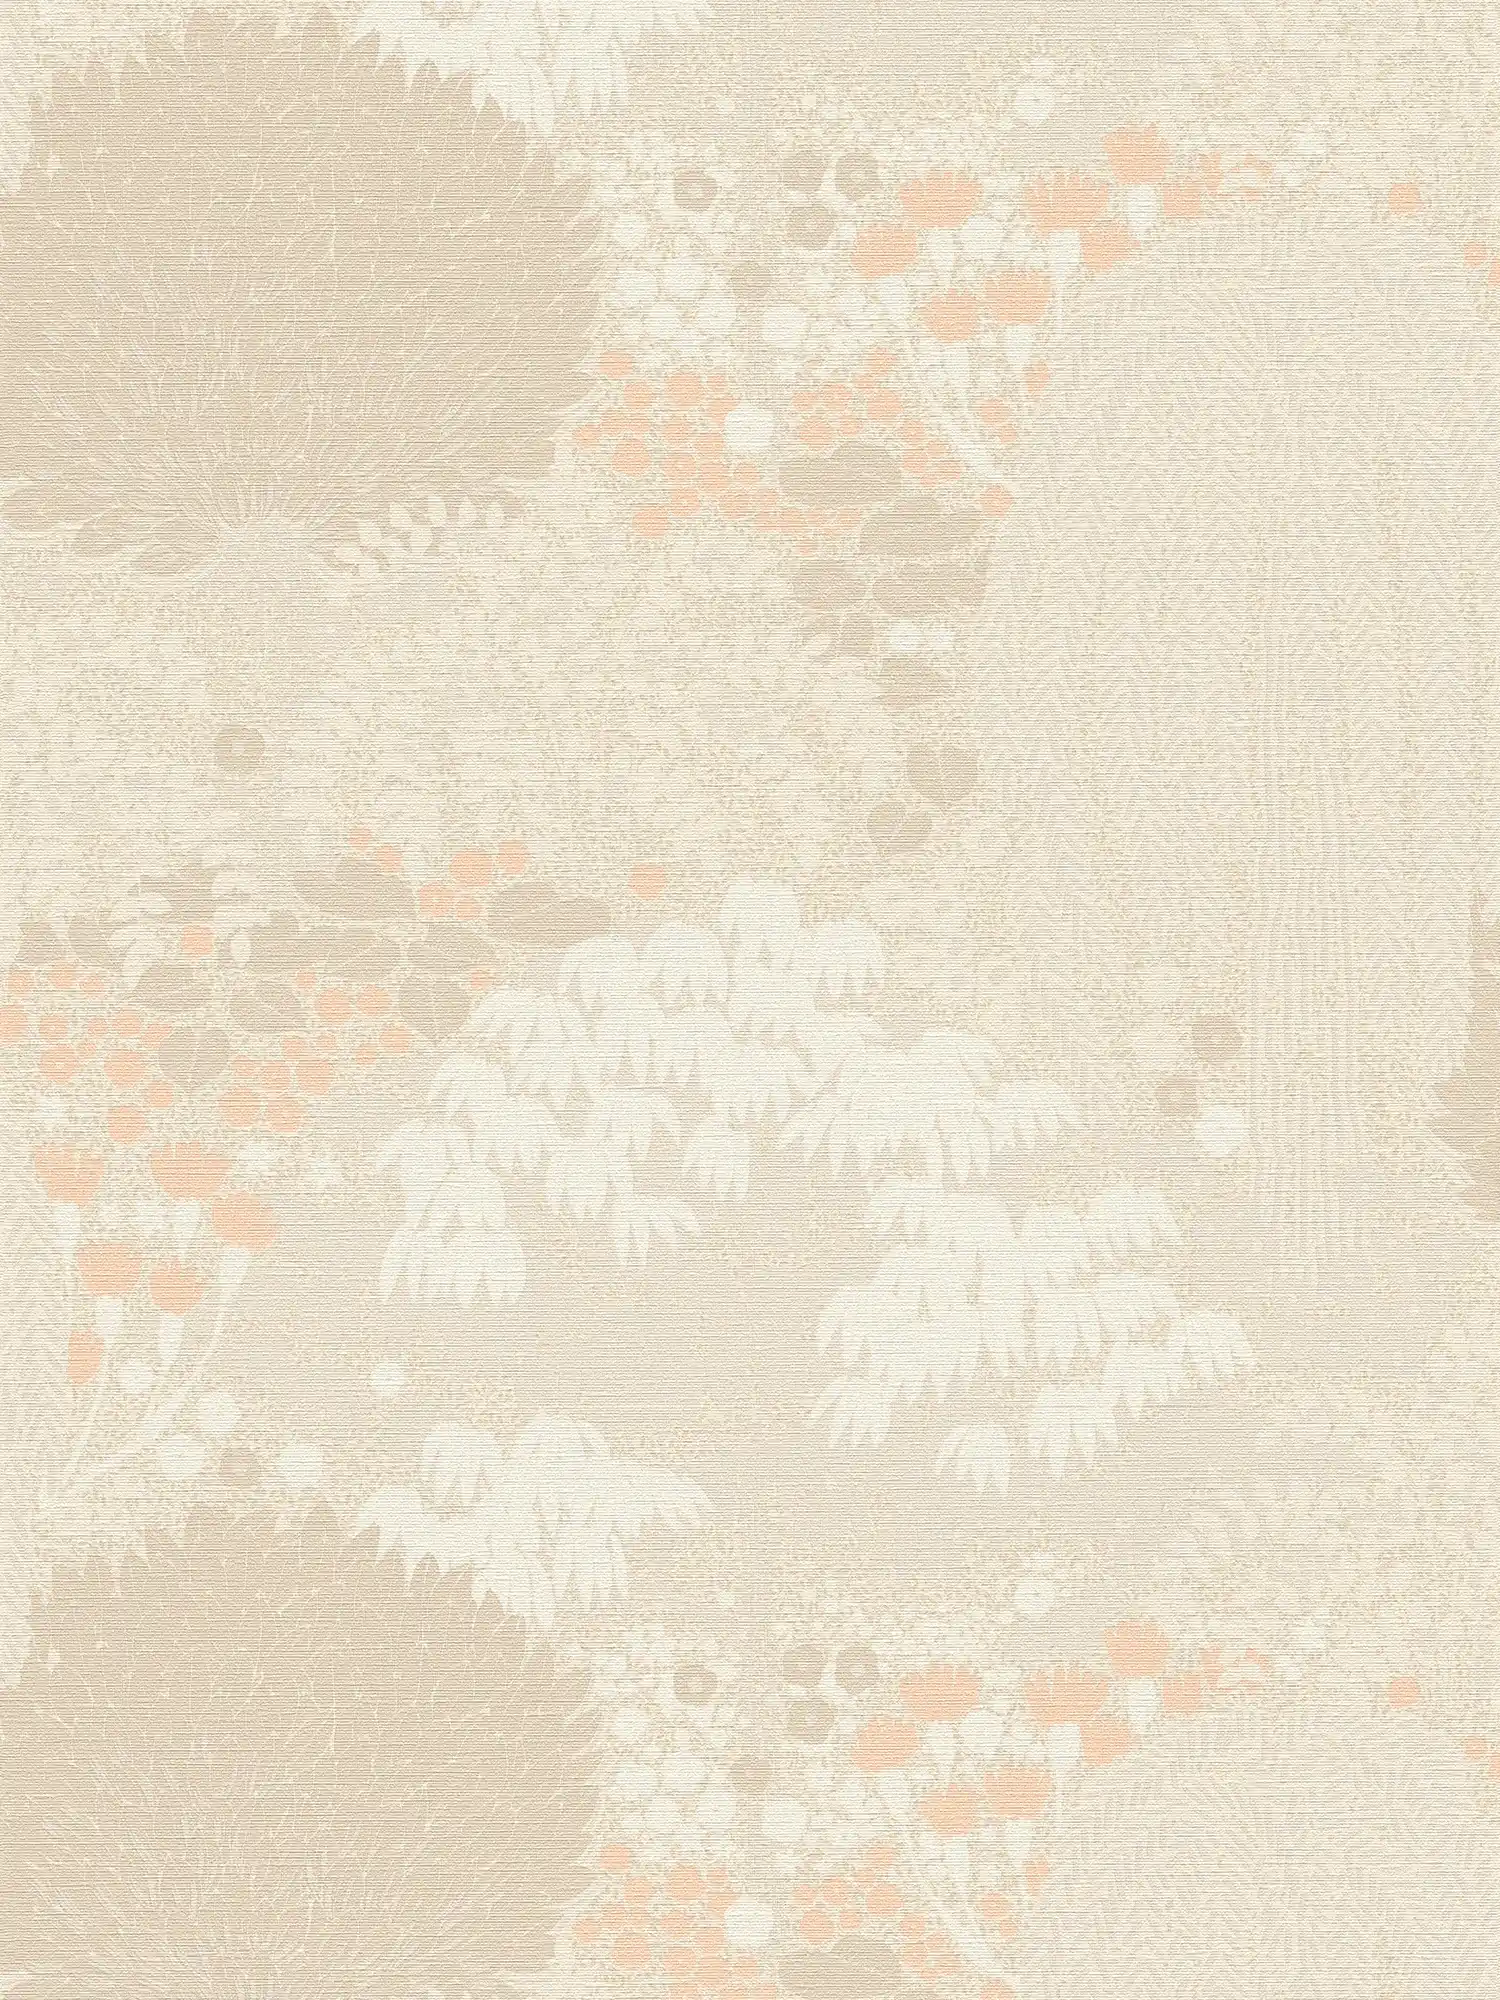 wallpaper floral with leaves light textured, matt - beige, cream, pink
